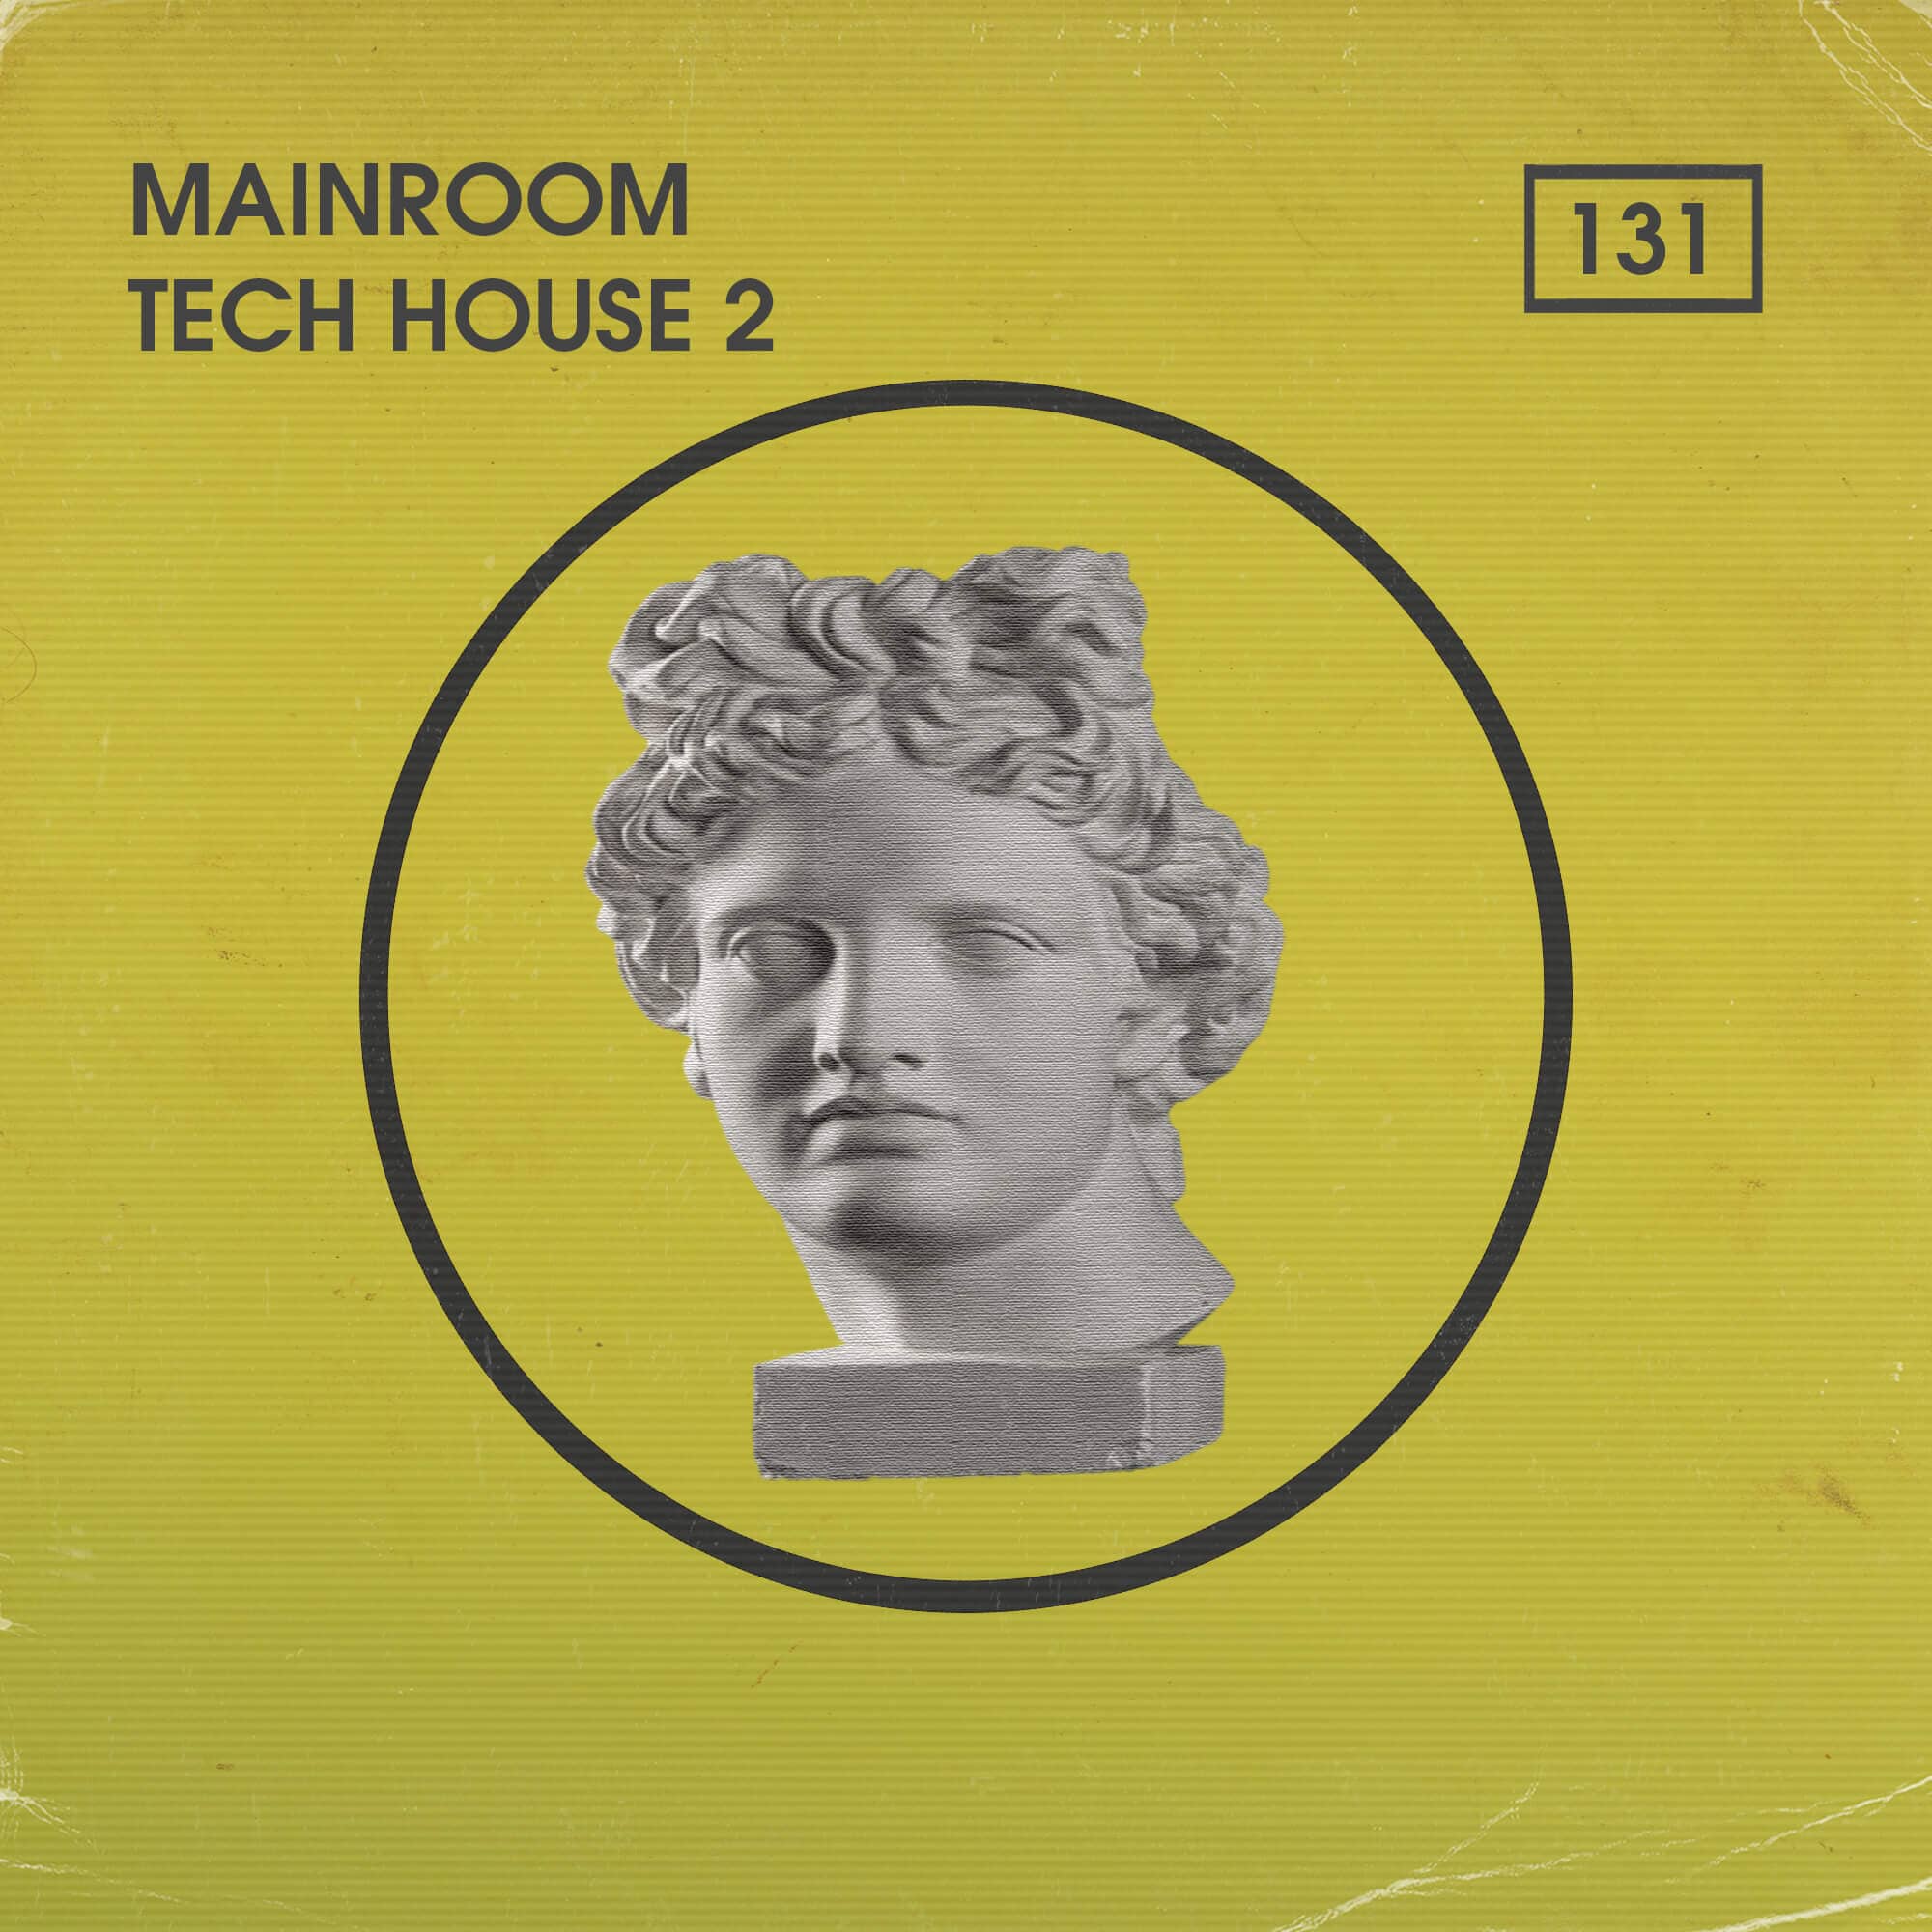 Mainroom Tech House 2 - Tech House Sample Pack (WAV MIDI and Rex2 Files) Sample Pack Bingoshakerz